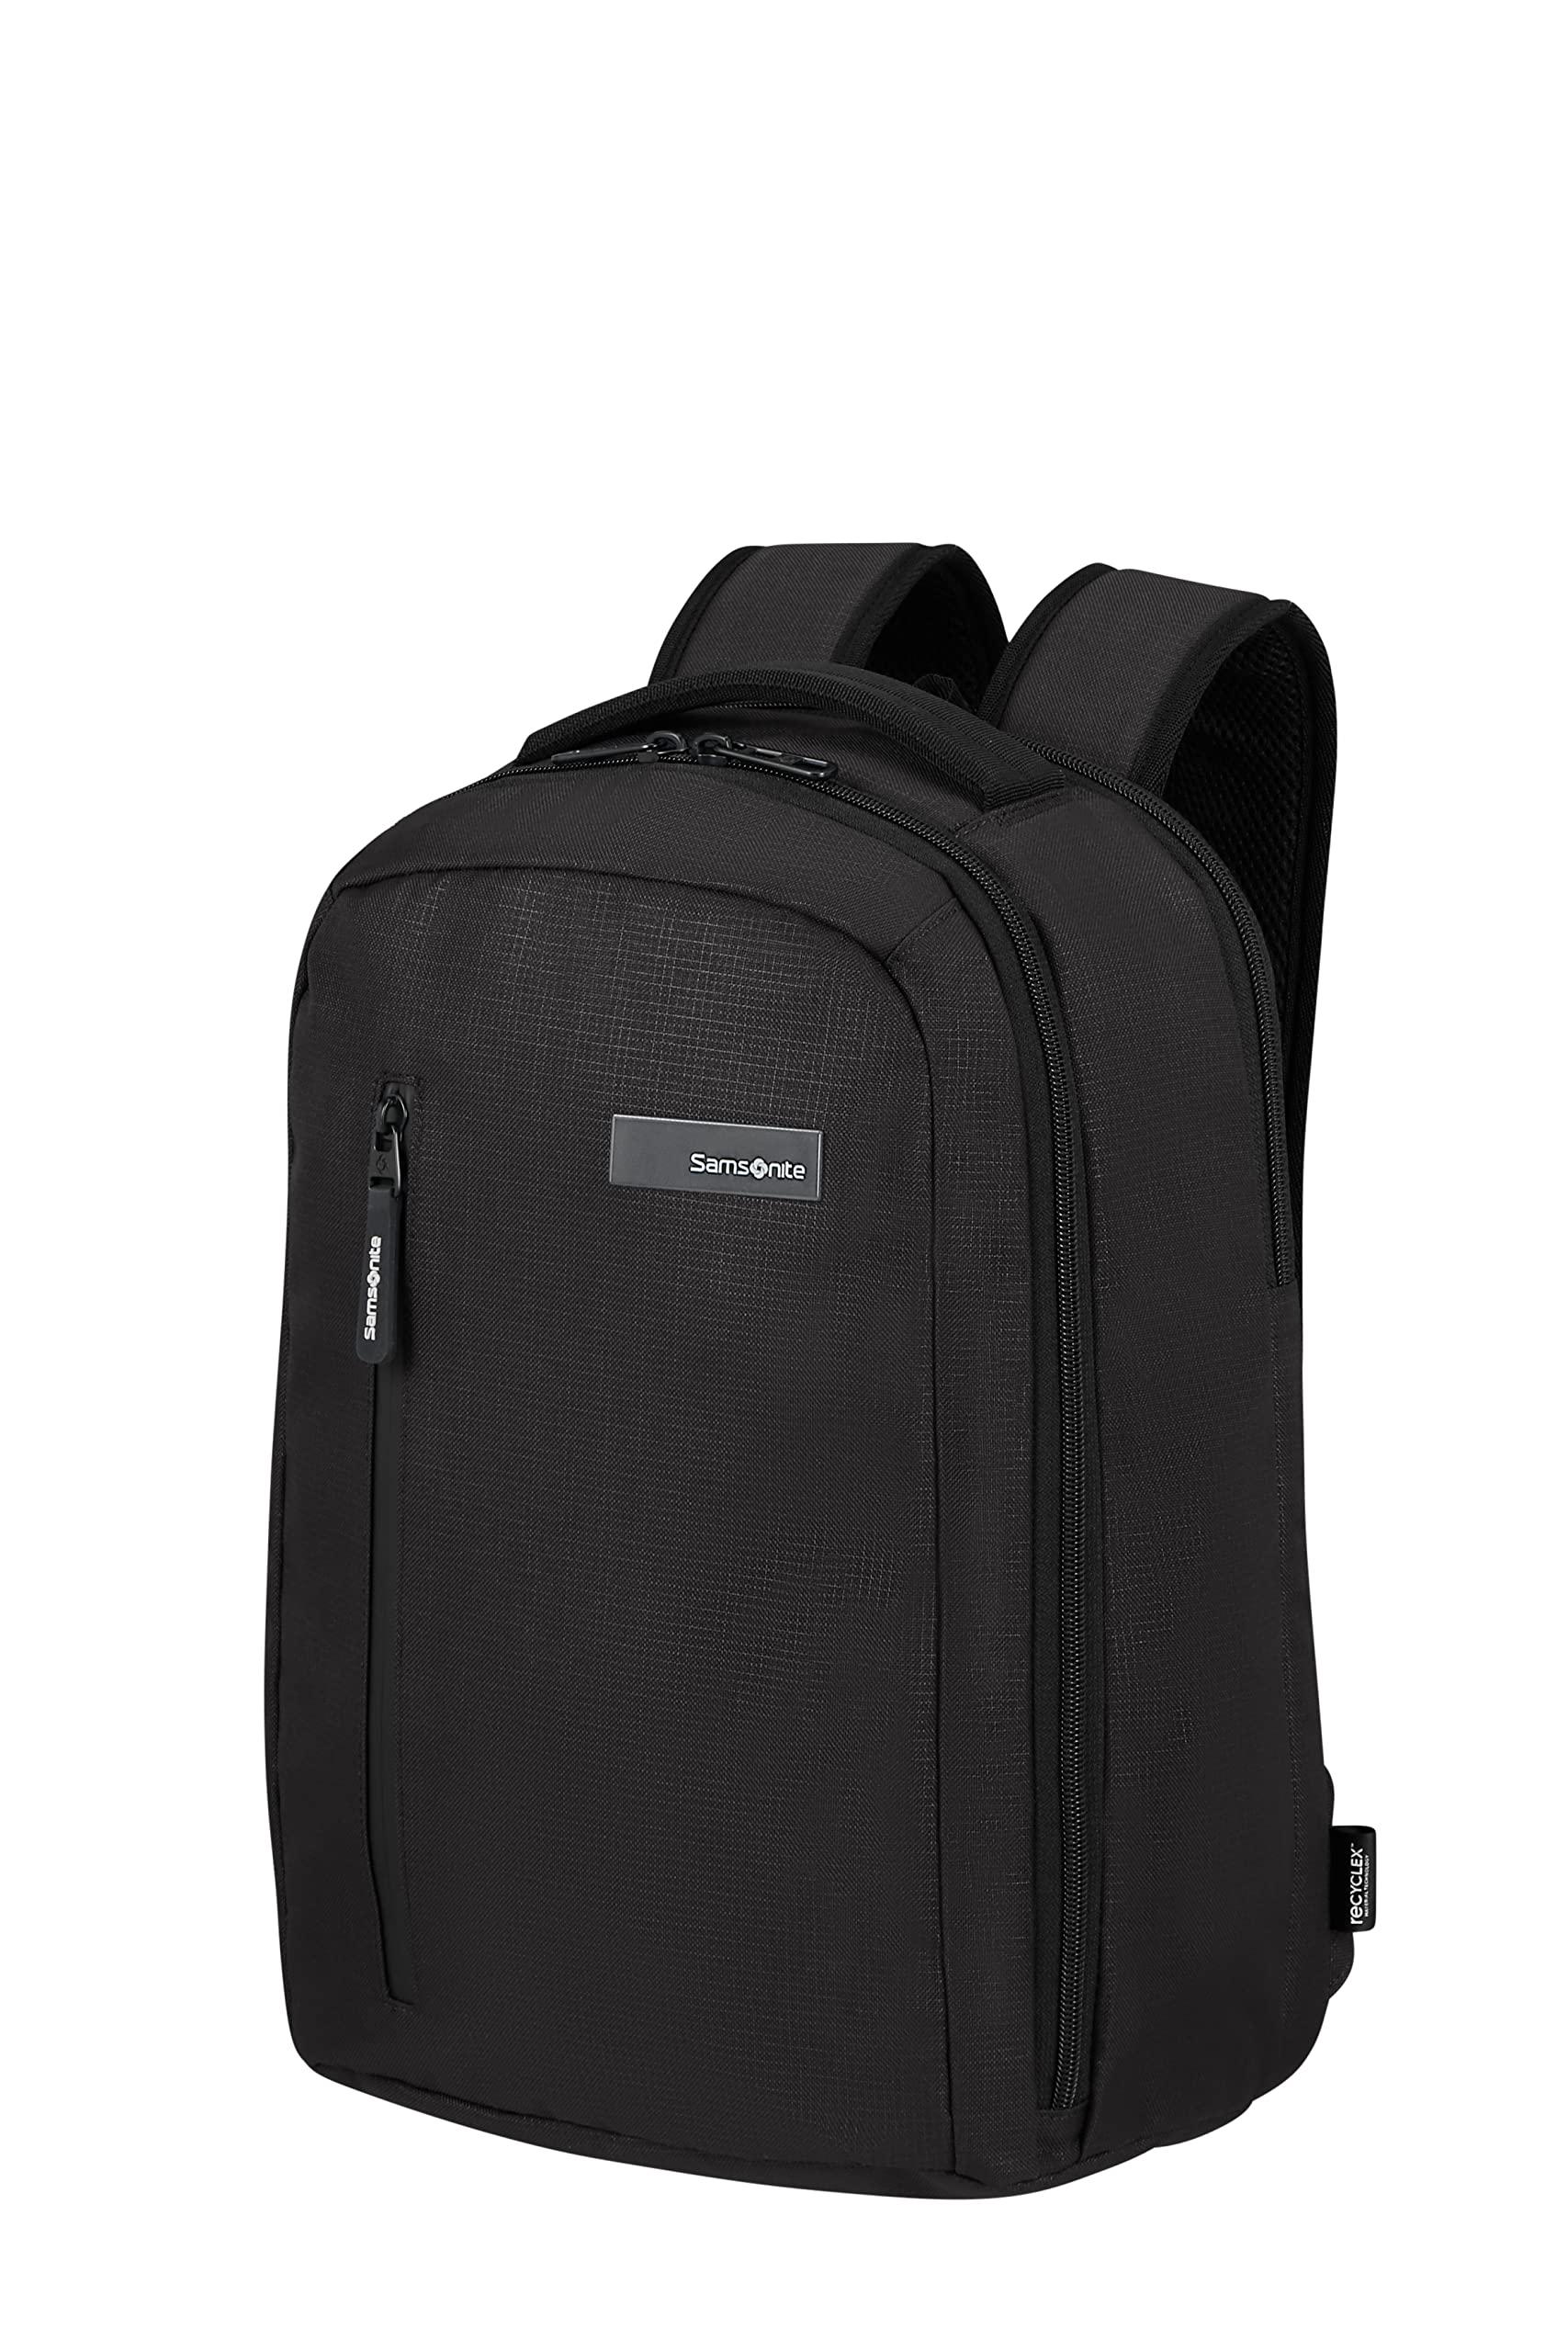 Samsonite Roader Travel Backpack S in Black | Lyst UK